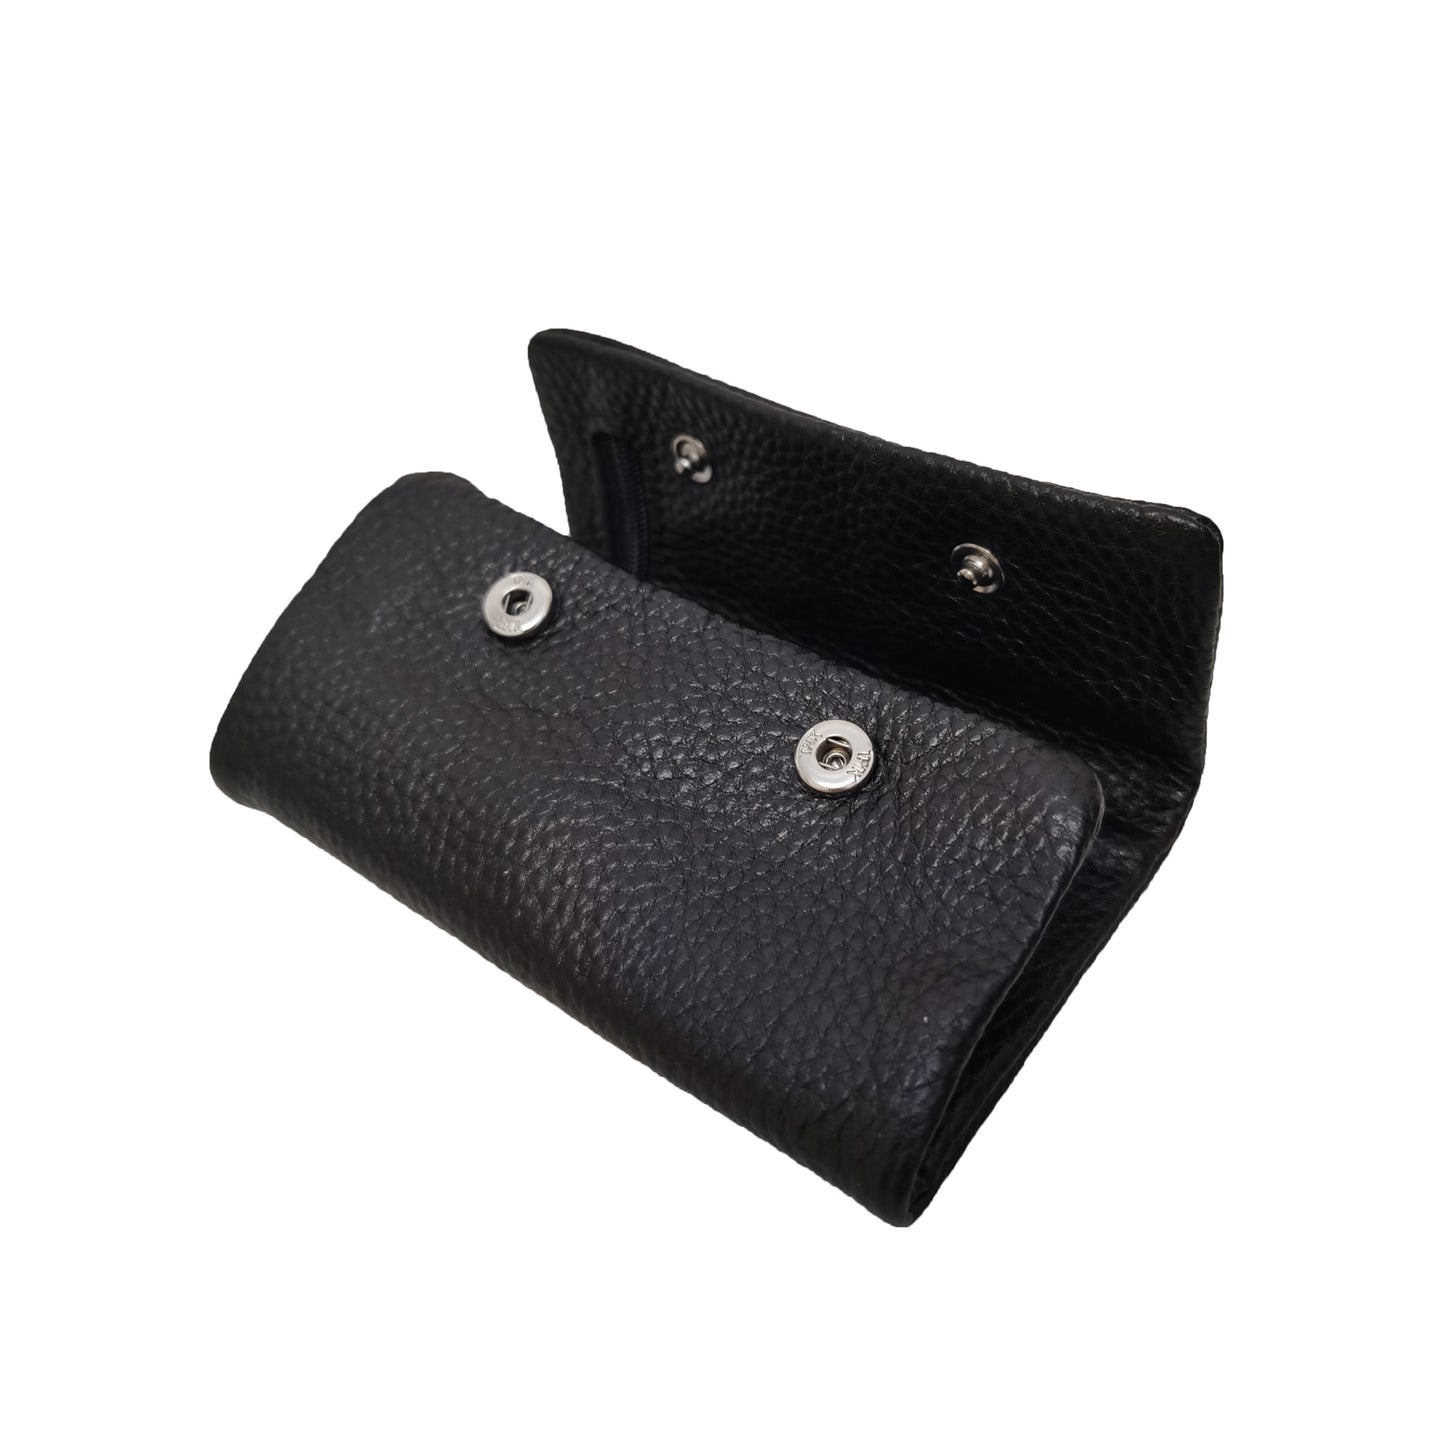 Unisex genuine cowhide leather key holder